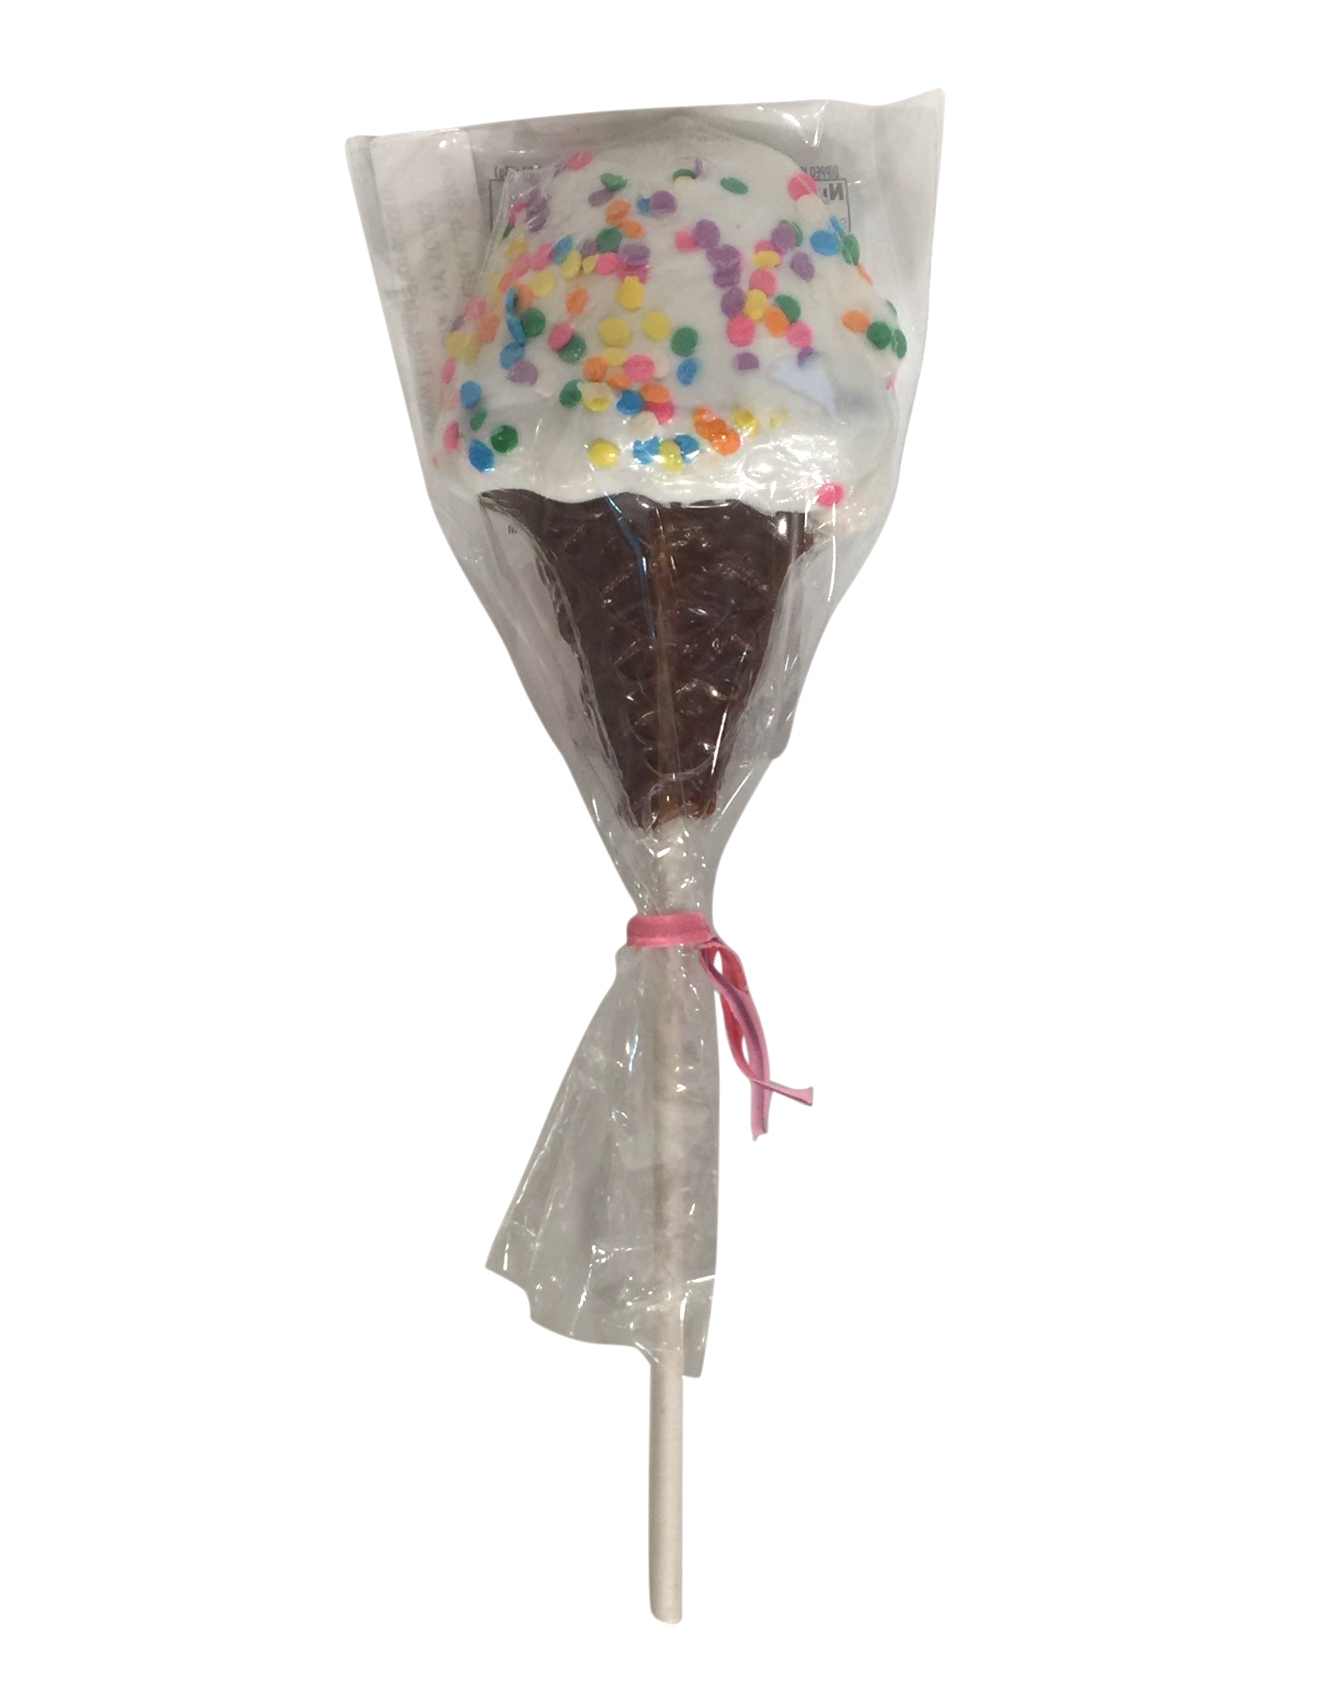 Melville confetti vanilla ice cream lollipop 1.5oz (43g)